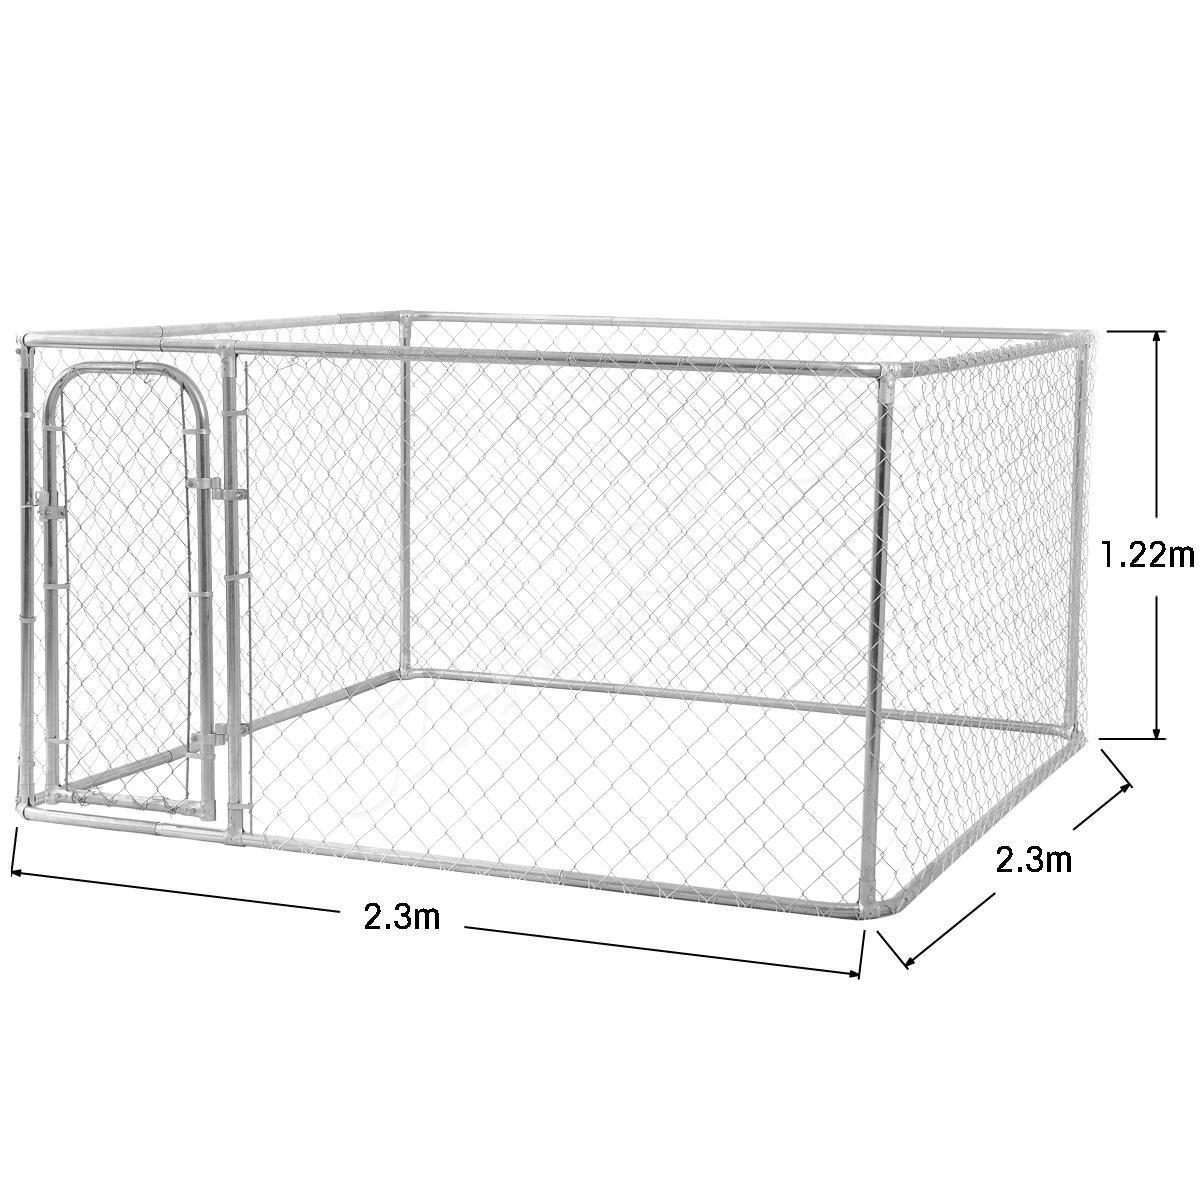 2.3 x 2.3m Steel Dog Enclosure